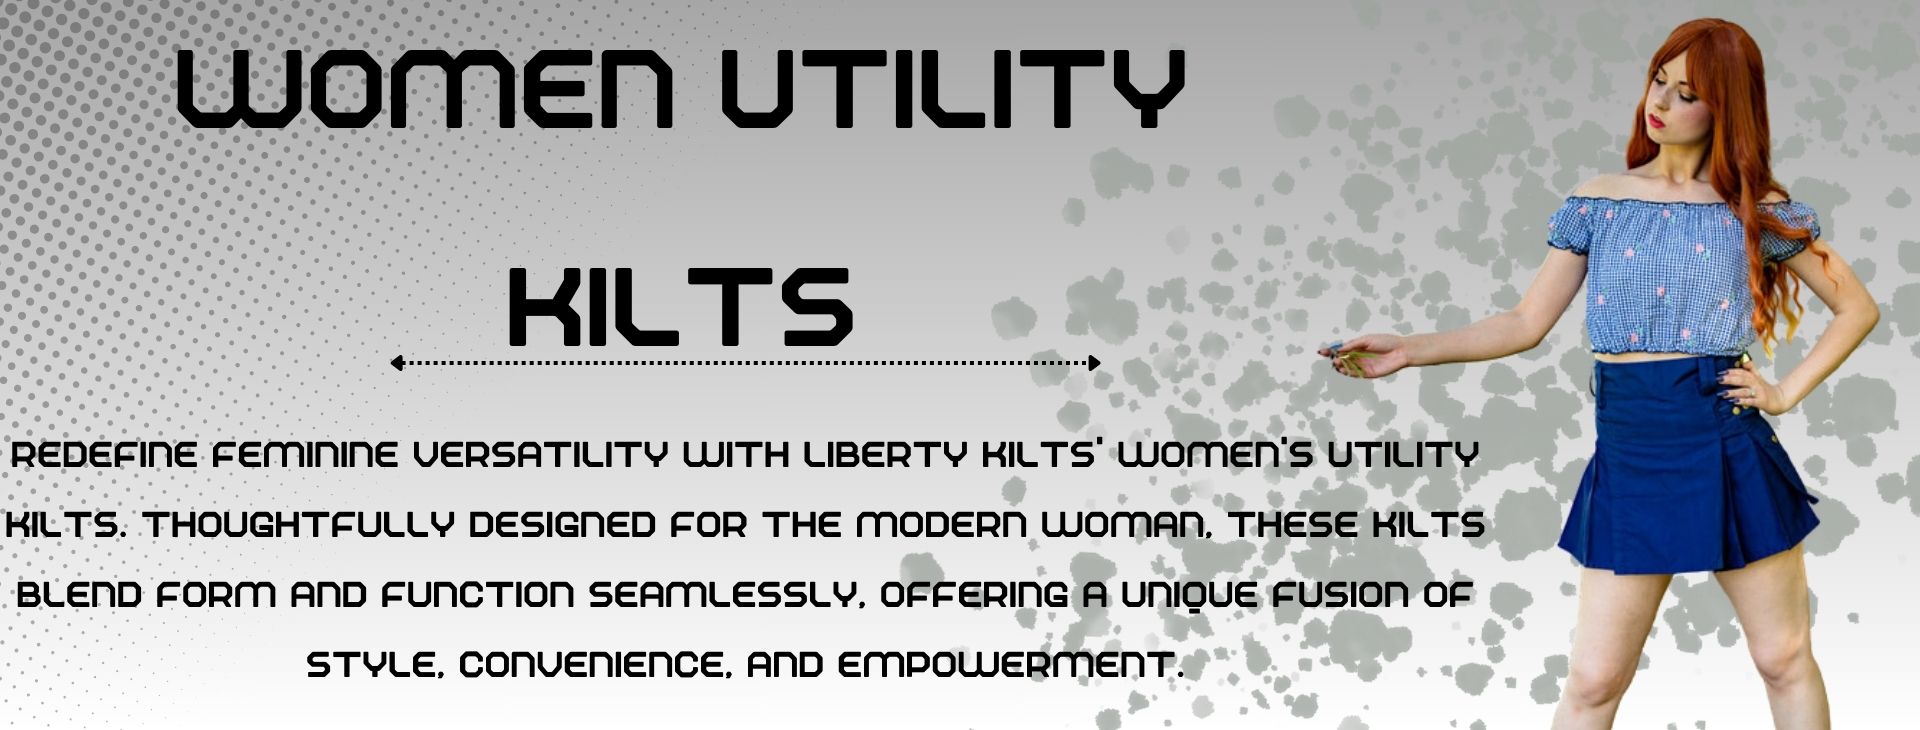 Utility Kilts for Women